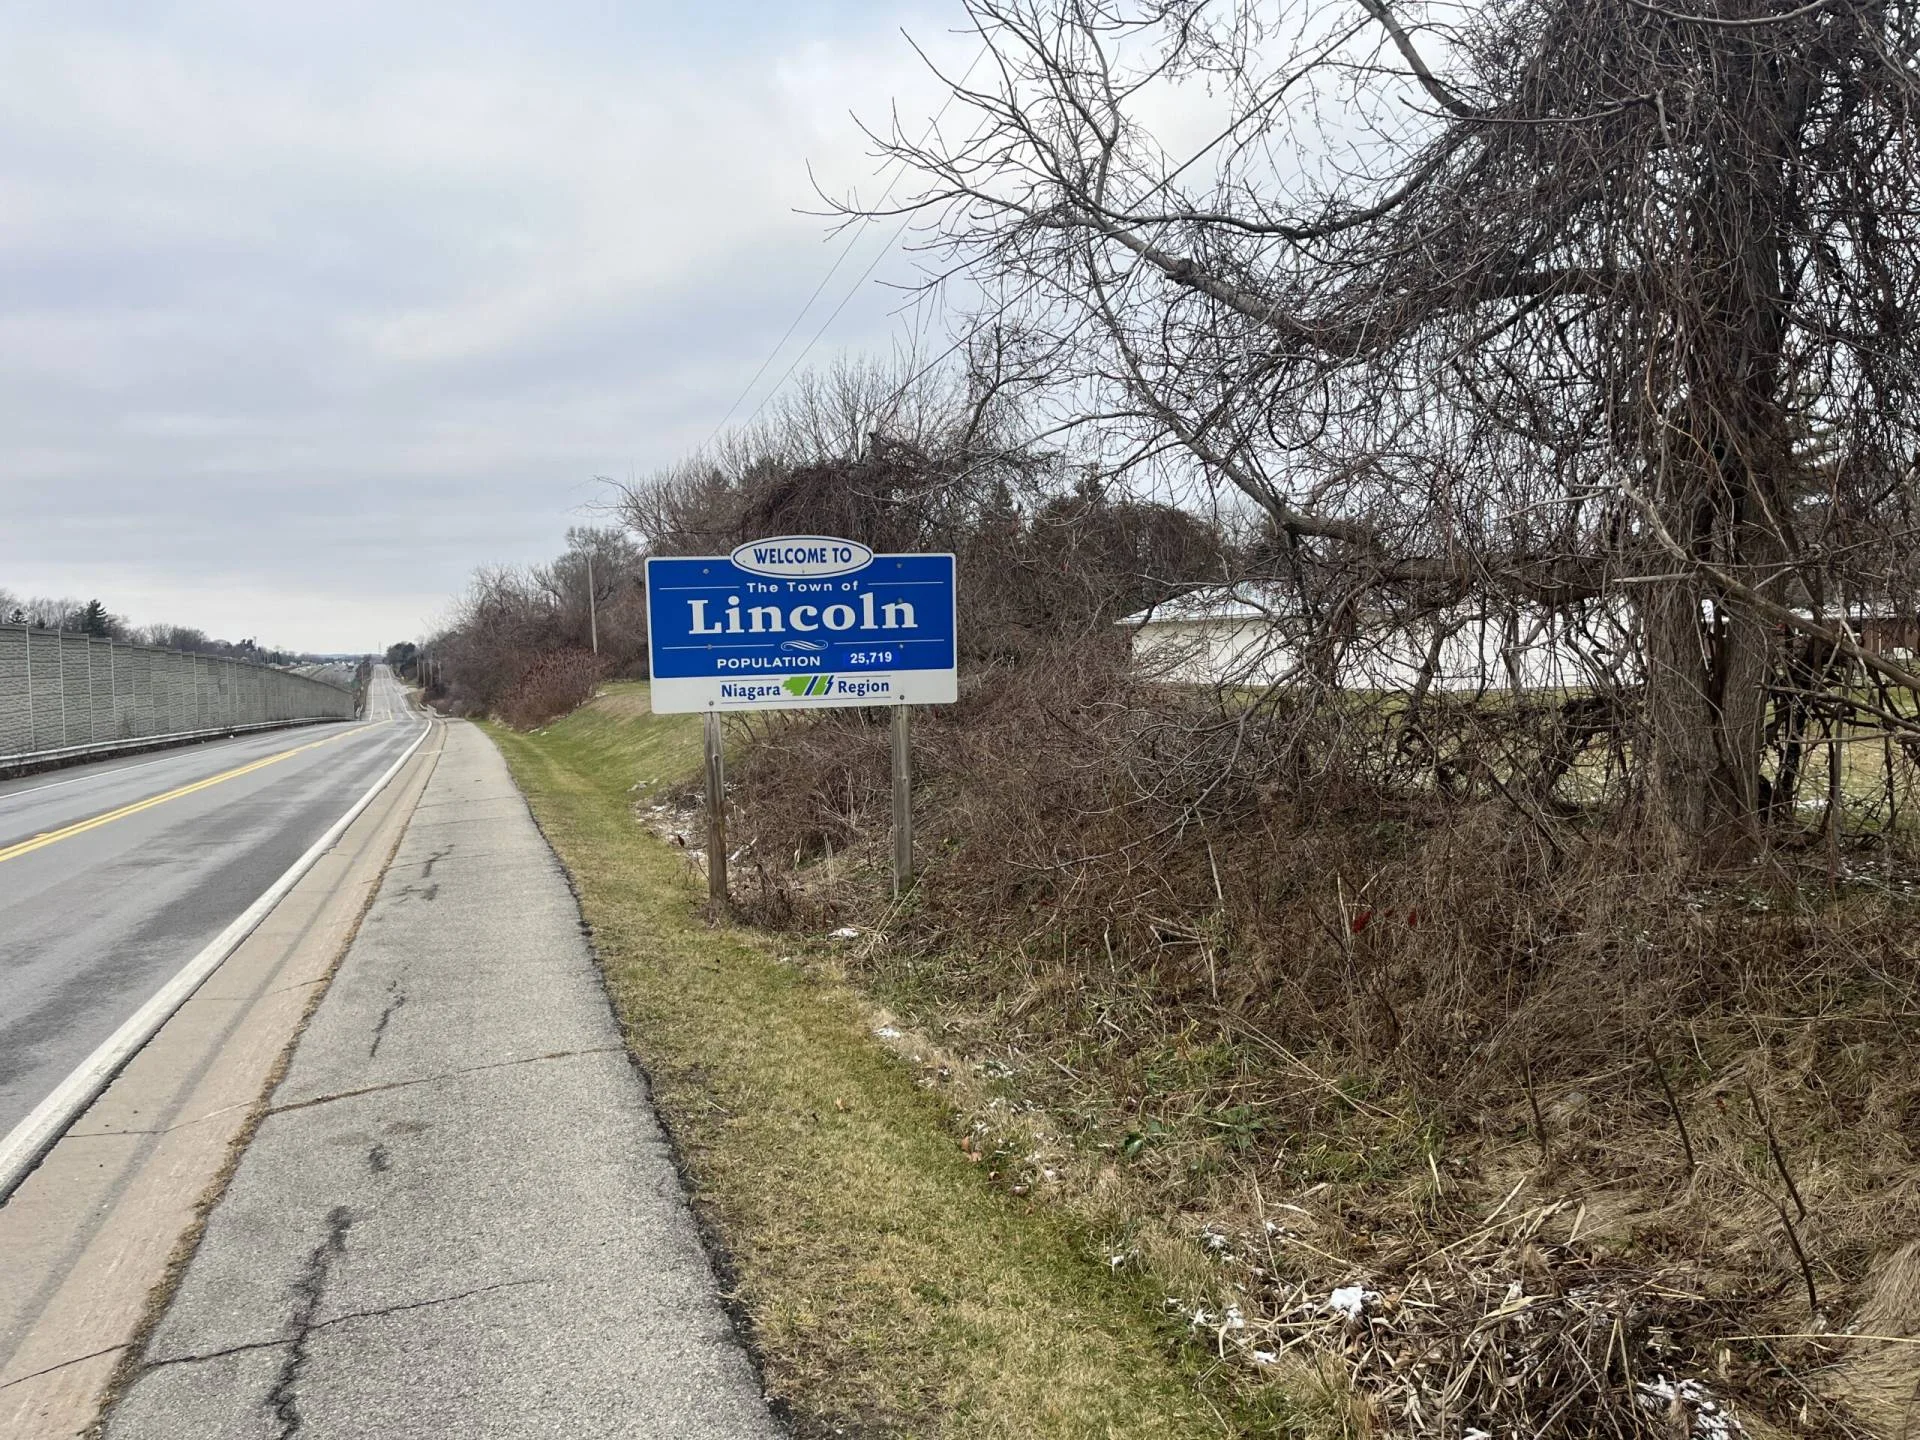 Lincoln, Niagara highway sing board